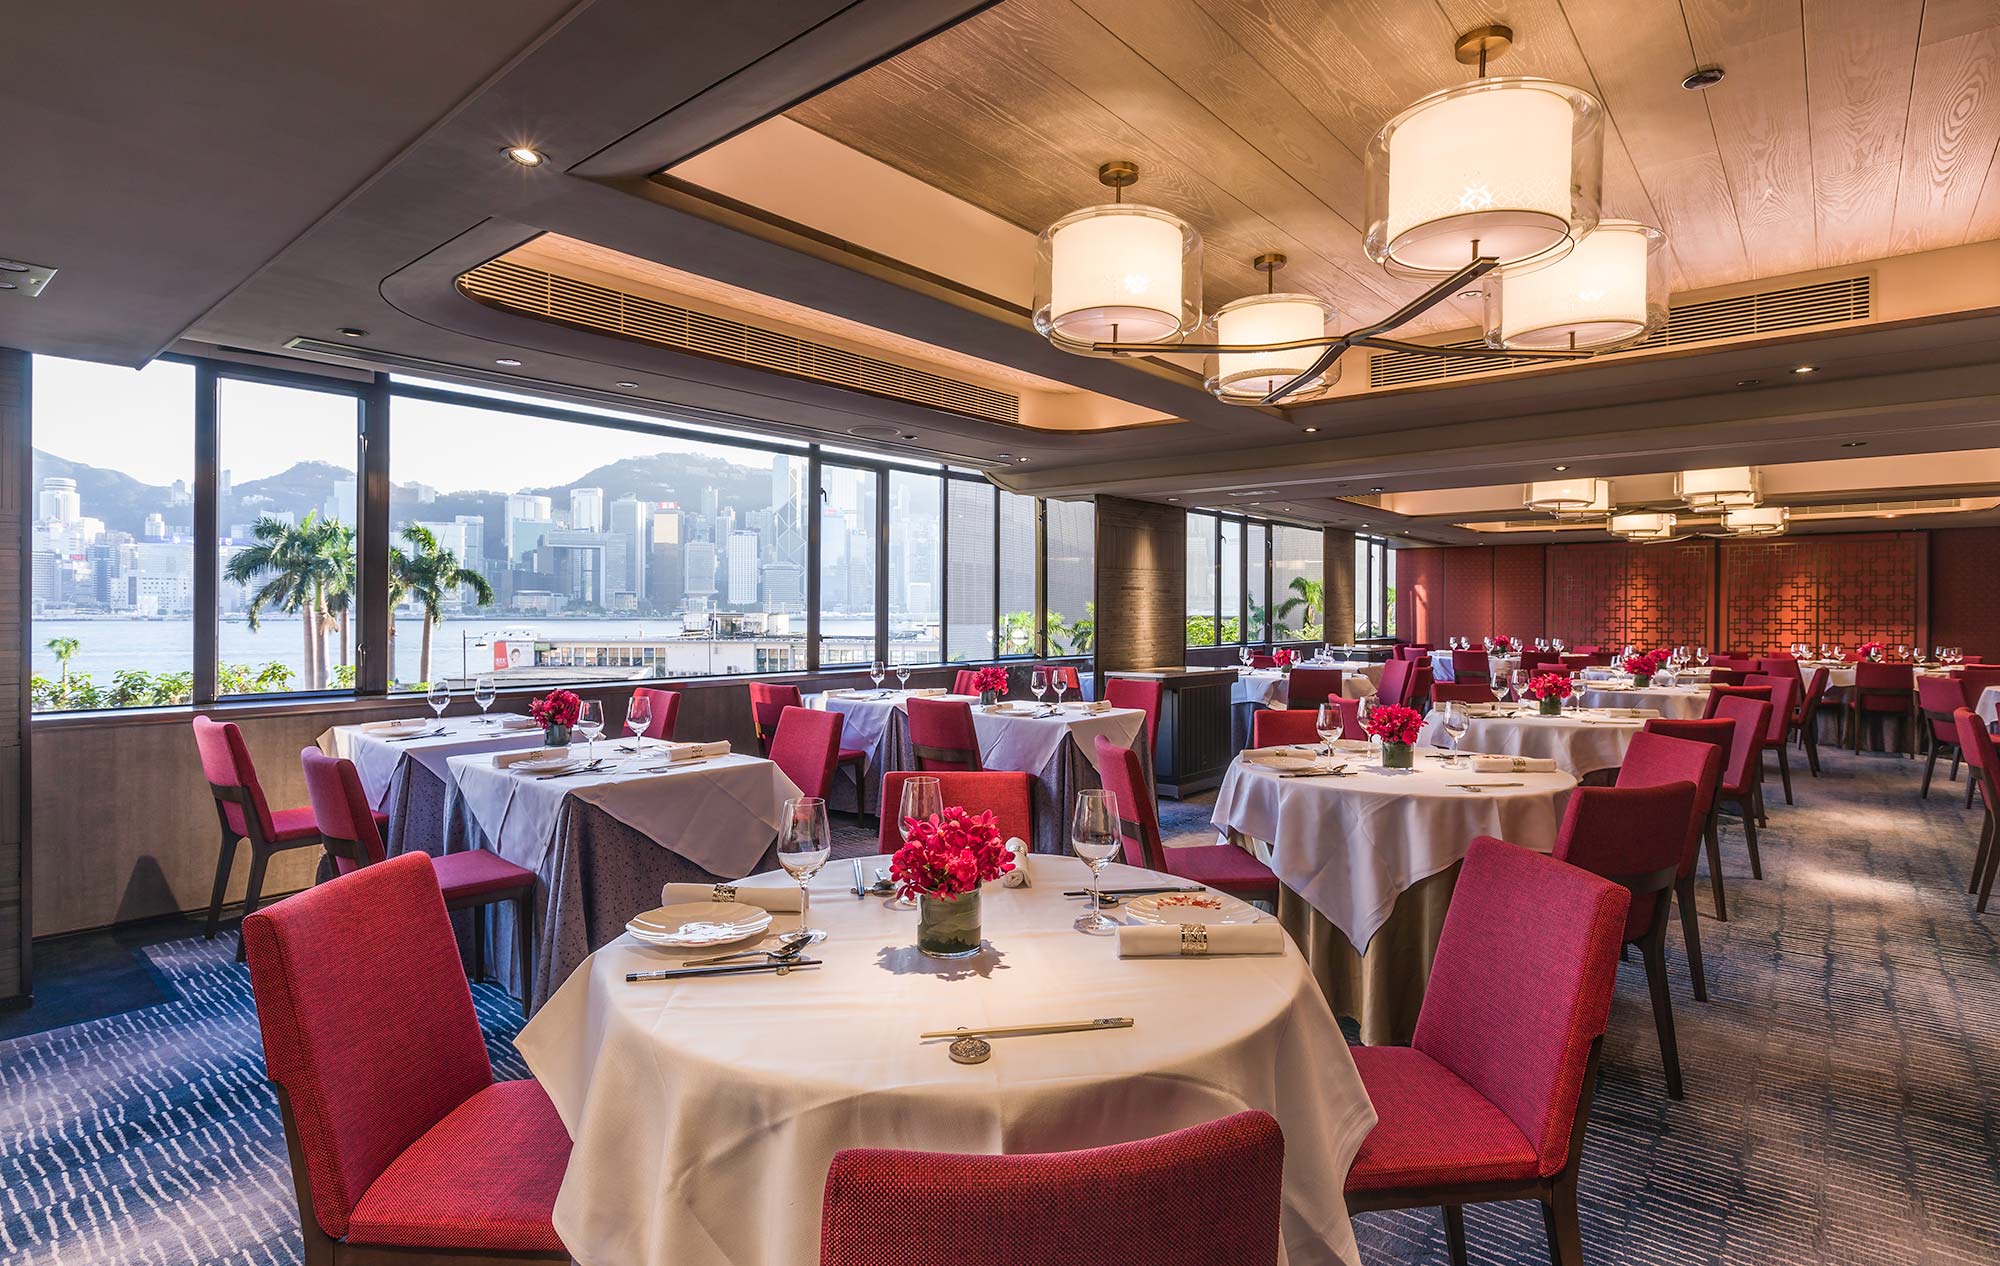 Peking Garden dining hall overlooking Victoria Harbour in Hong Kong is one of the best Chinese restaurants